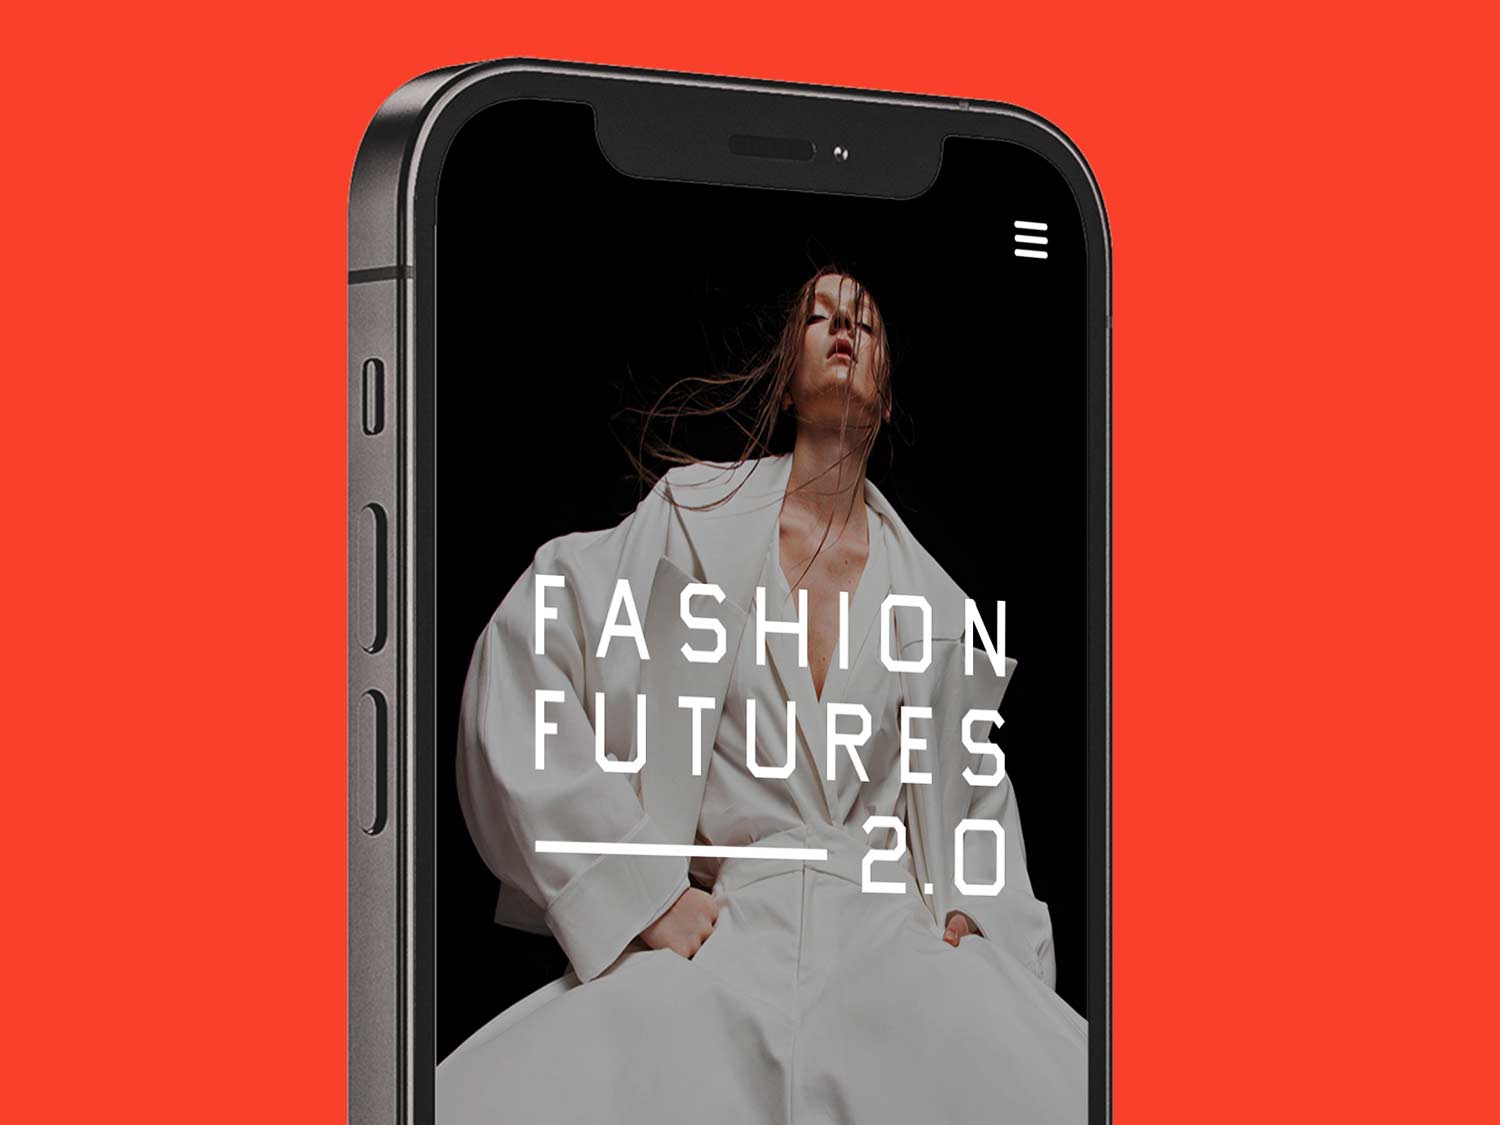 Fashion Futures 2.0